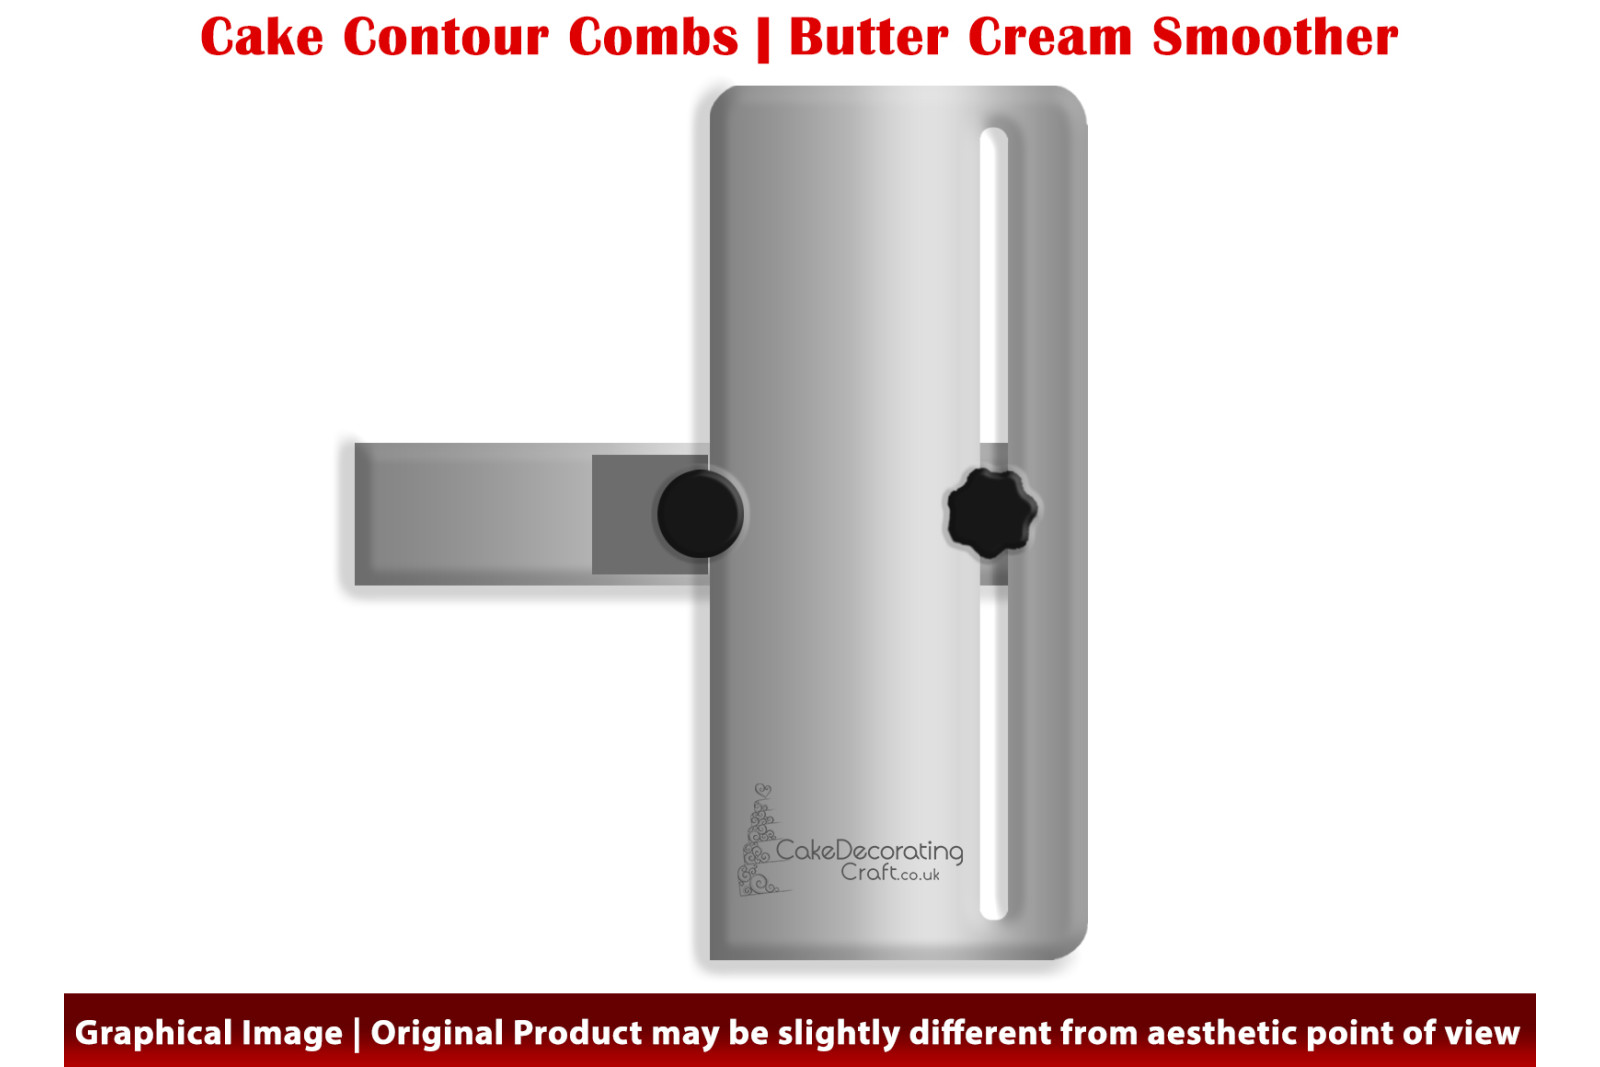 Adjustable Crisp Corners | Cake Decorating Craft | Cake Contour Combs | Smoothing | Metal Spreader | Butter Cream Smoothing | Genius Tool